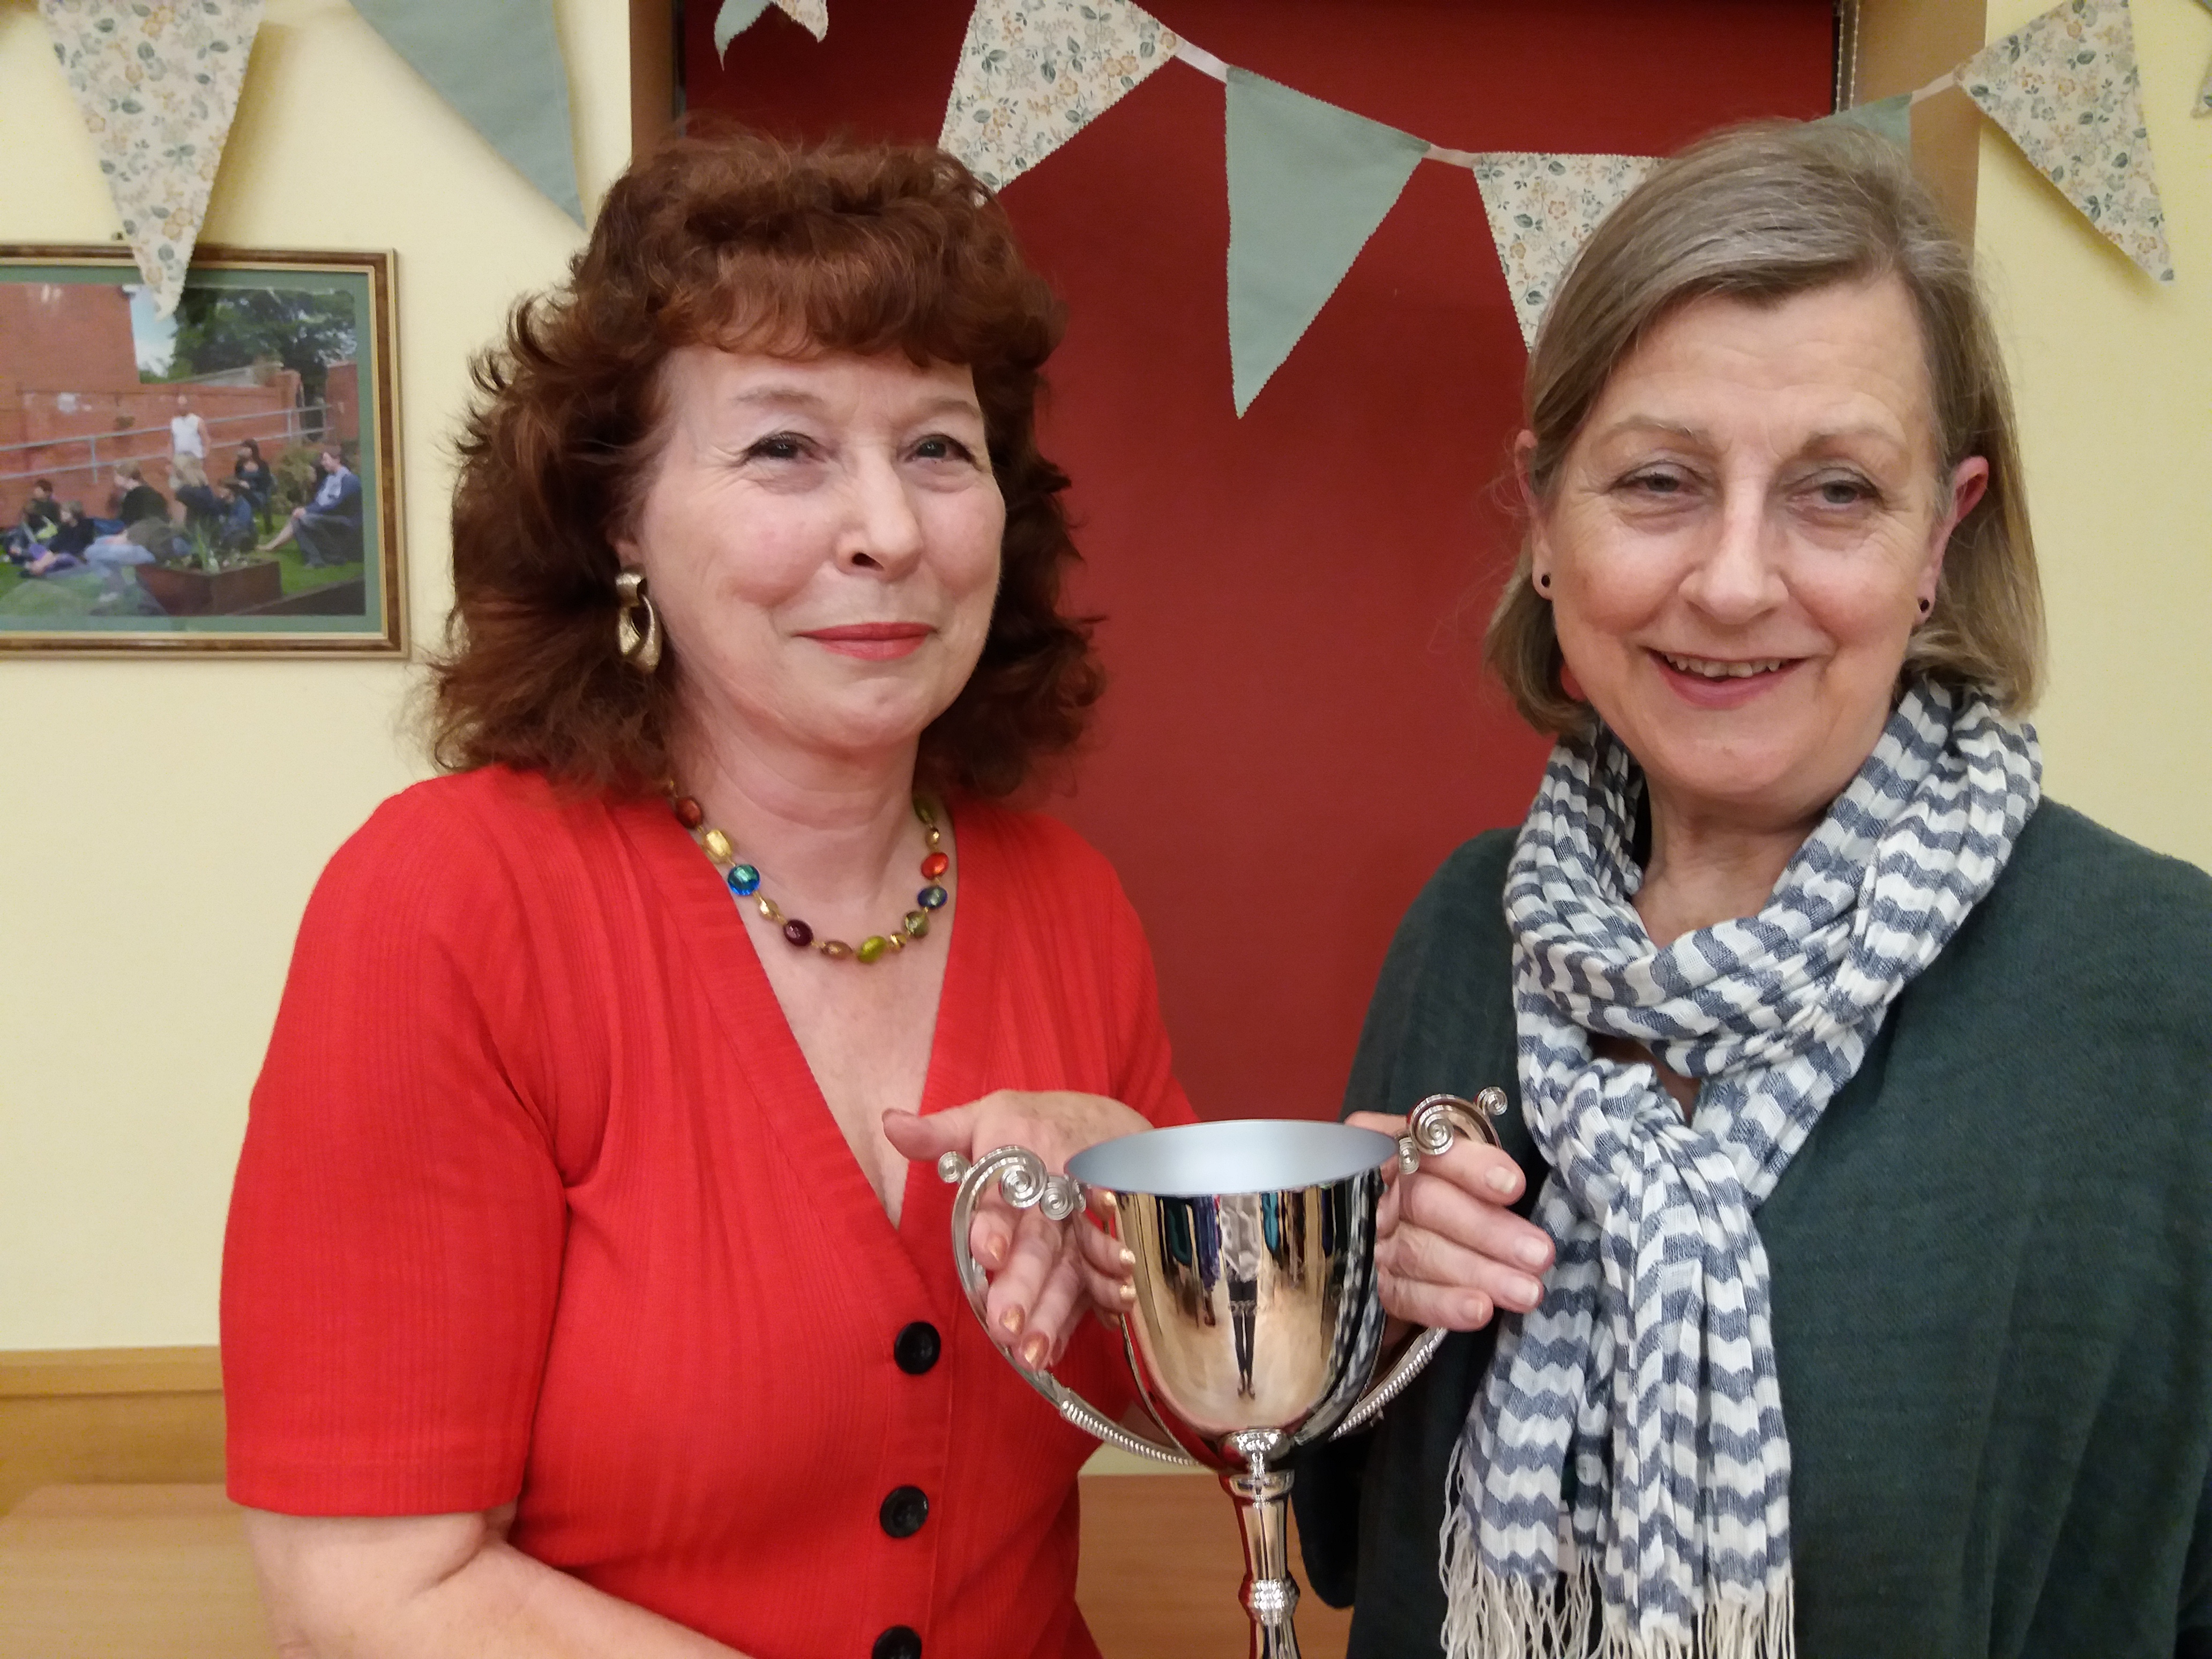 The Shirley Cowshall Cup